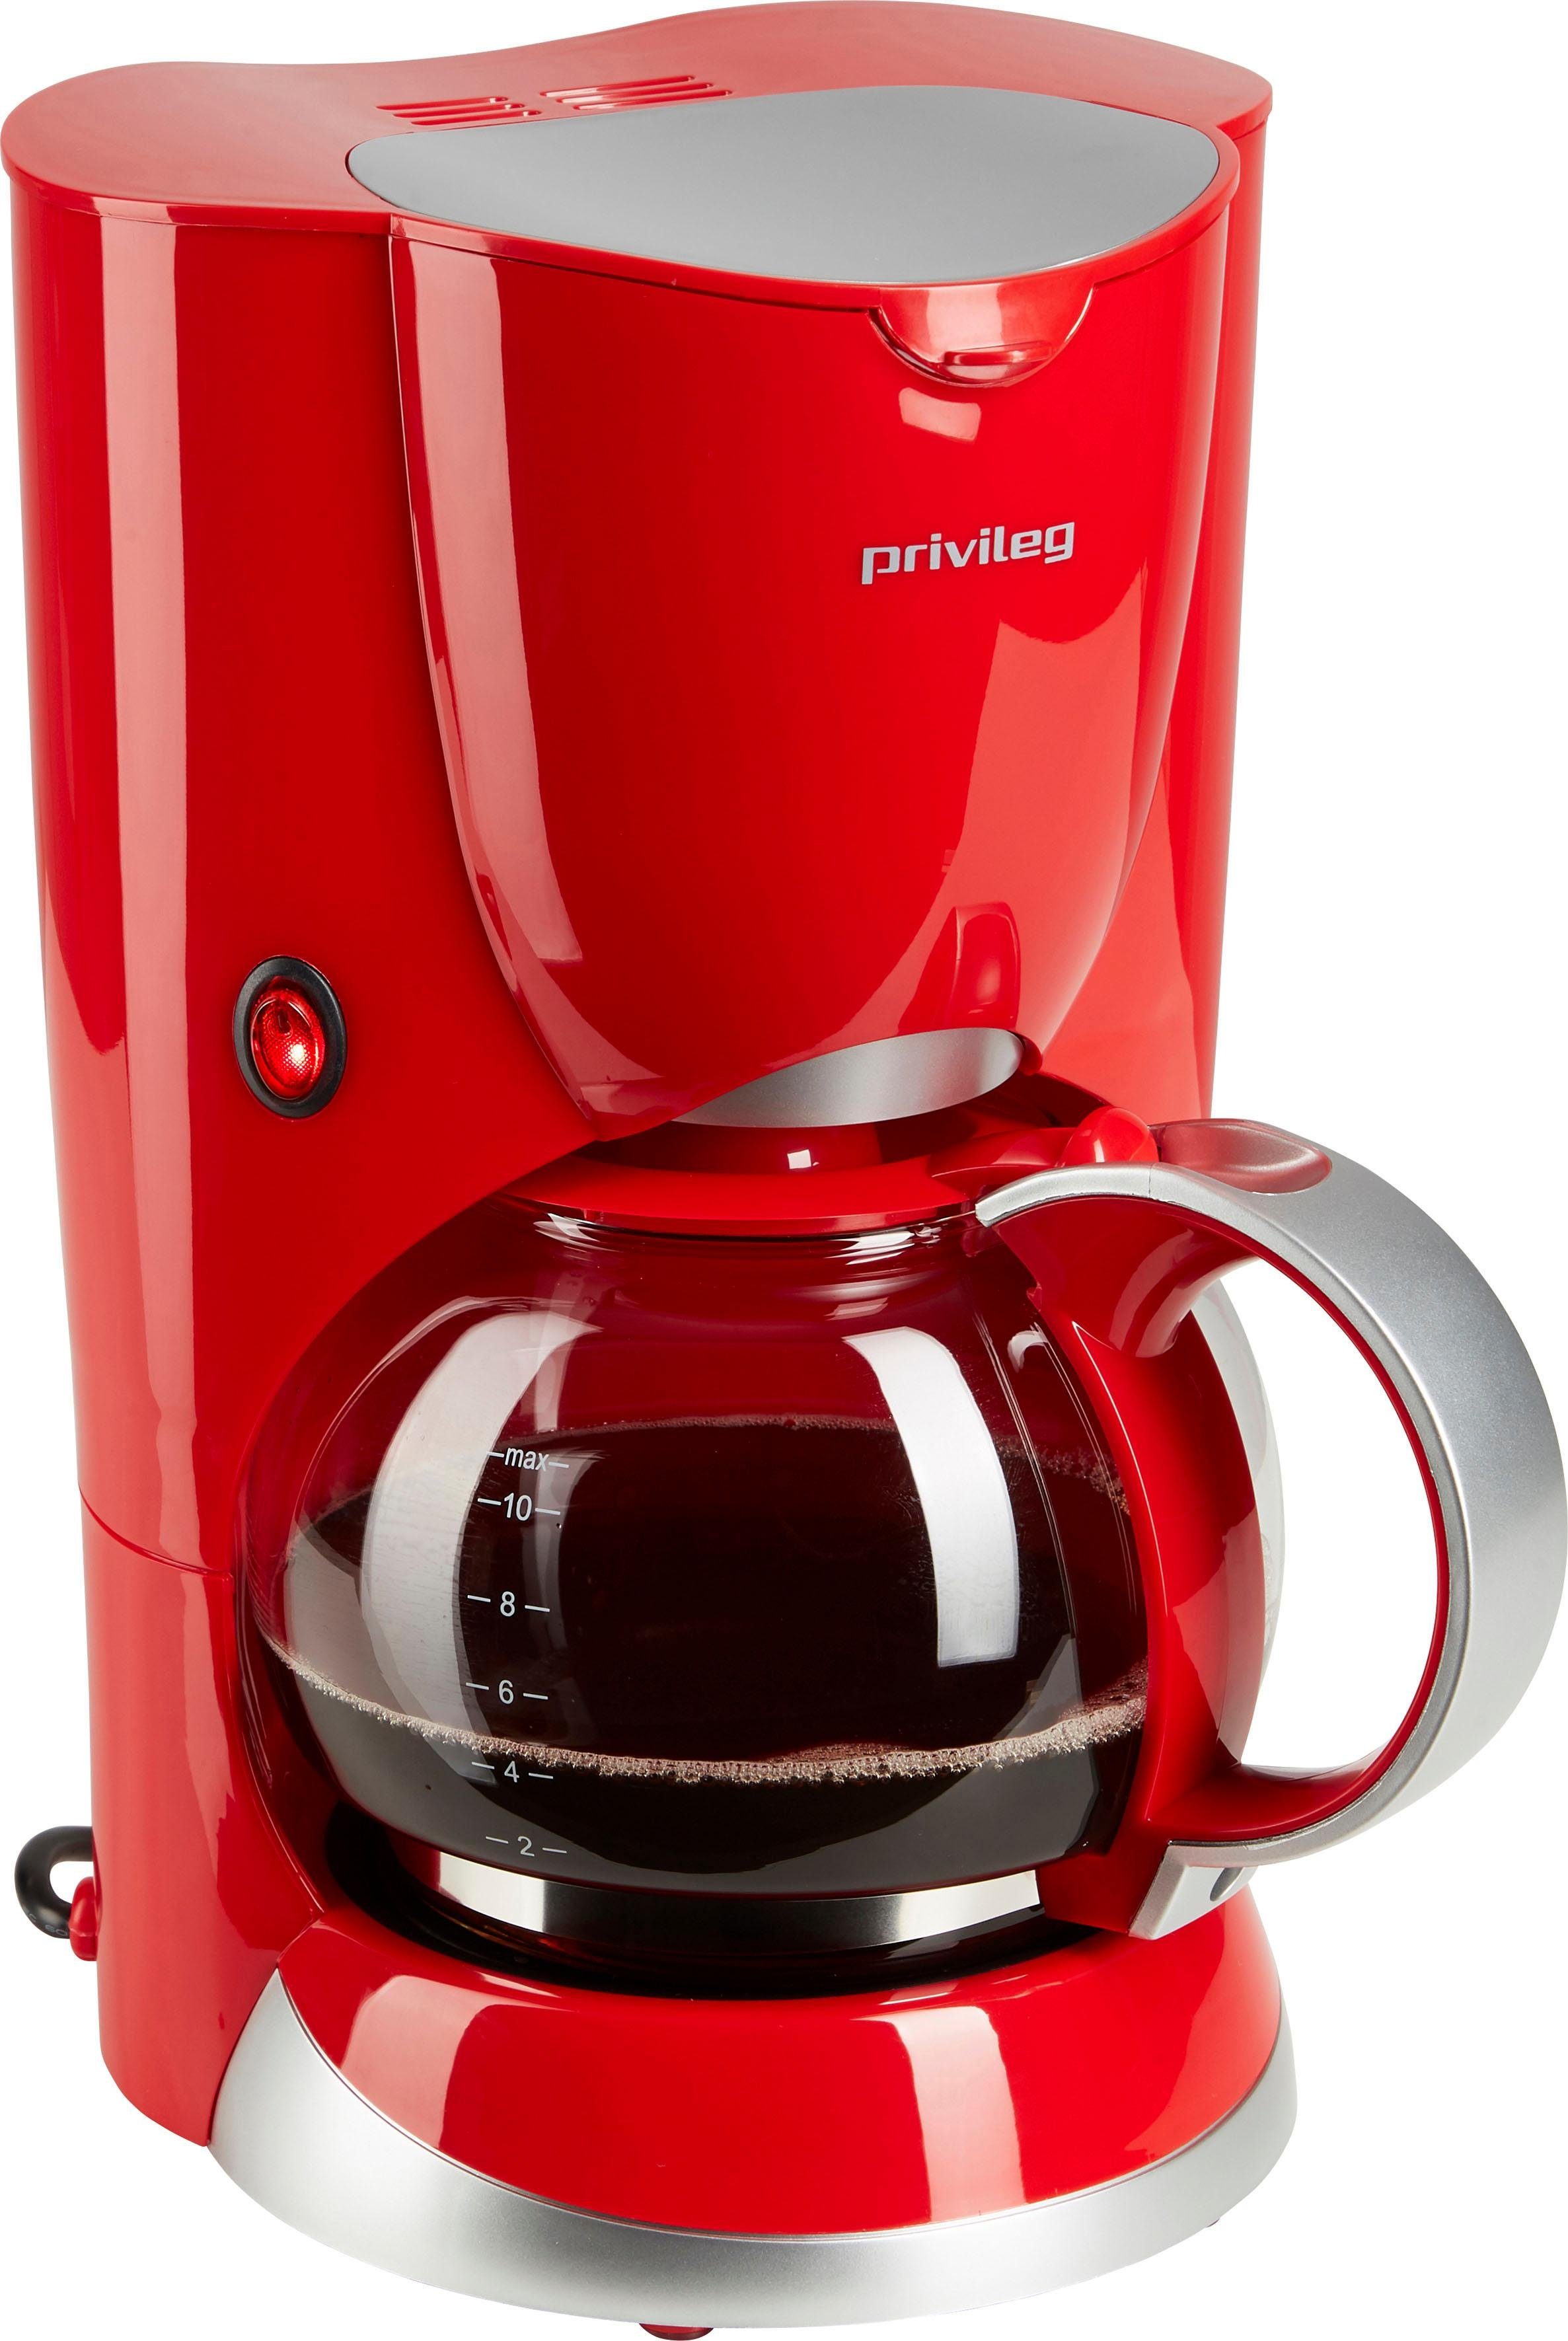 Privileg Filterkaffeemaschine 747528, 1,37l Kaffeekanne, Papierfilter 1x4,  Max. 1080 Watt, rot online kaufen | OTTO